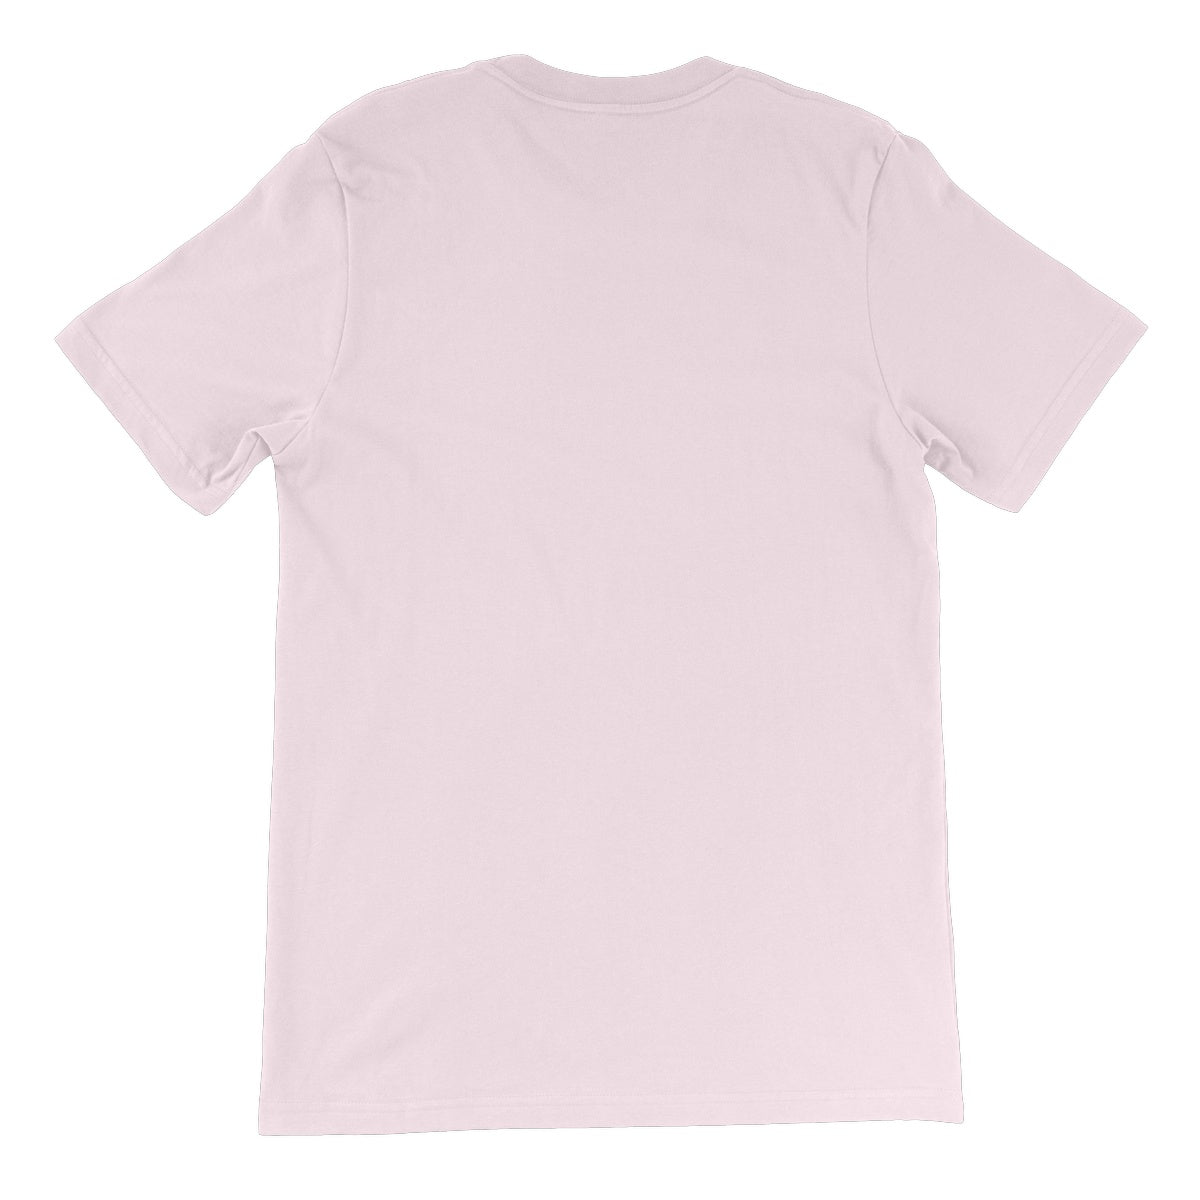 AL PACINO - SCARFACE TUX Unisex Short Sleeve T-Shirt